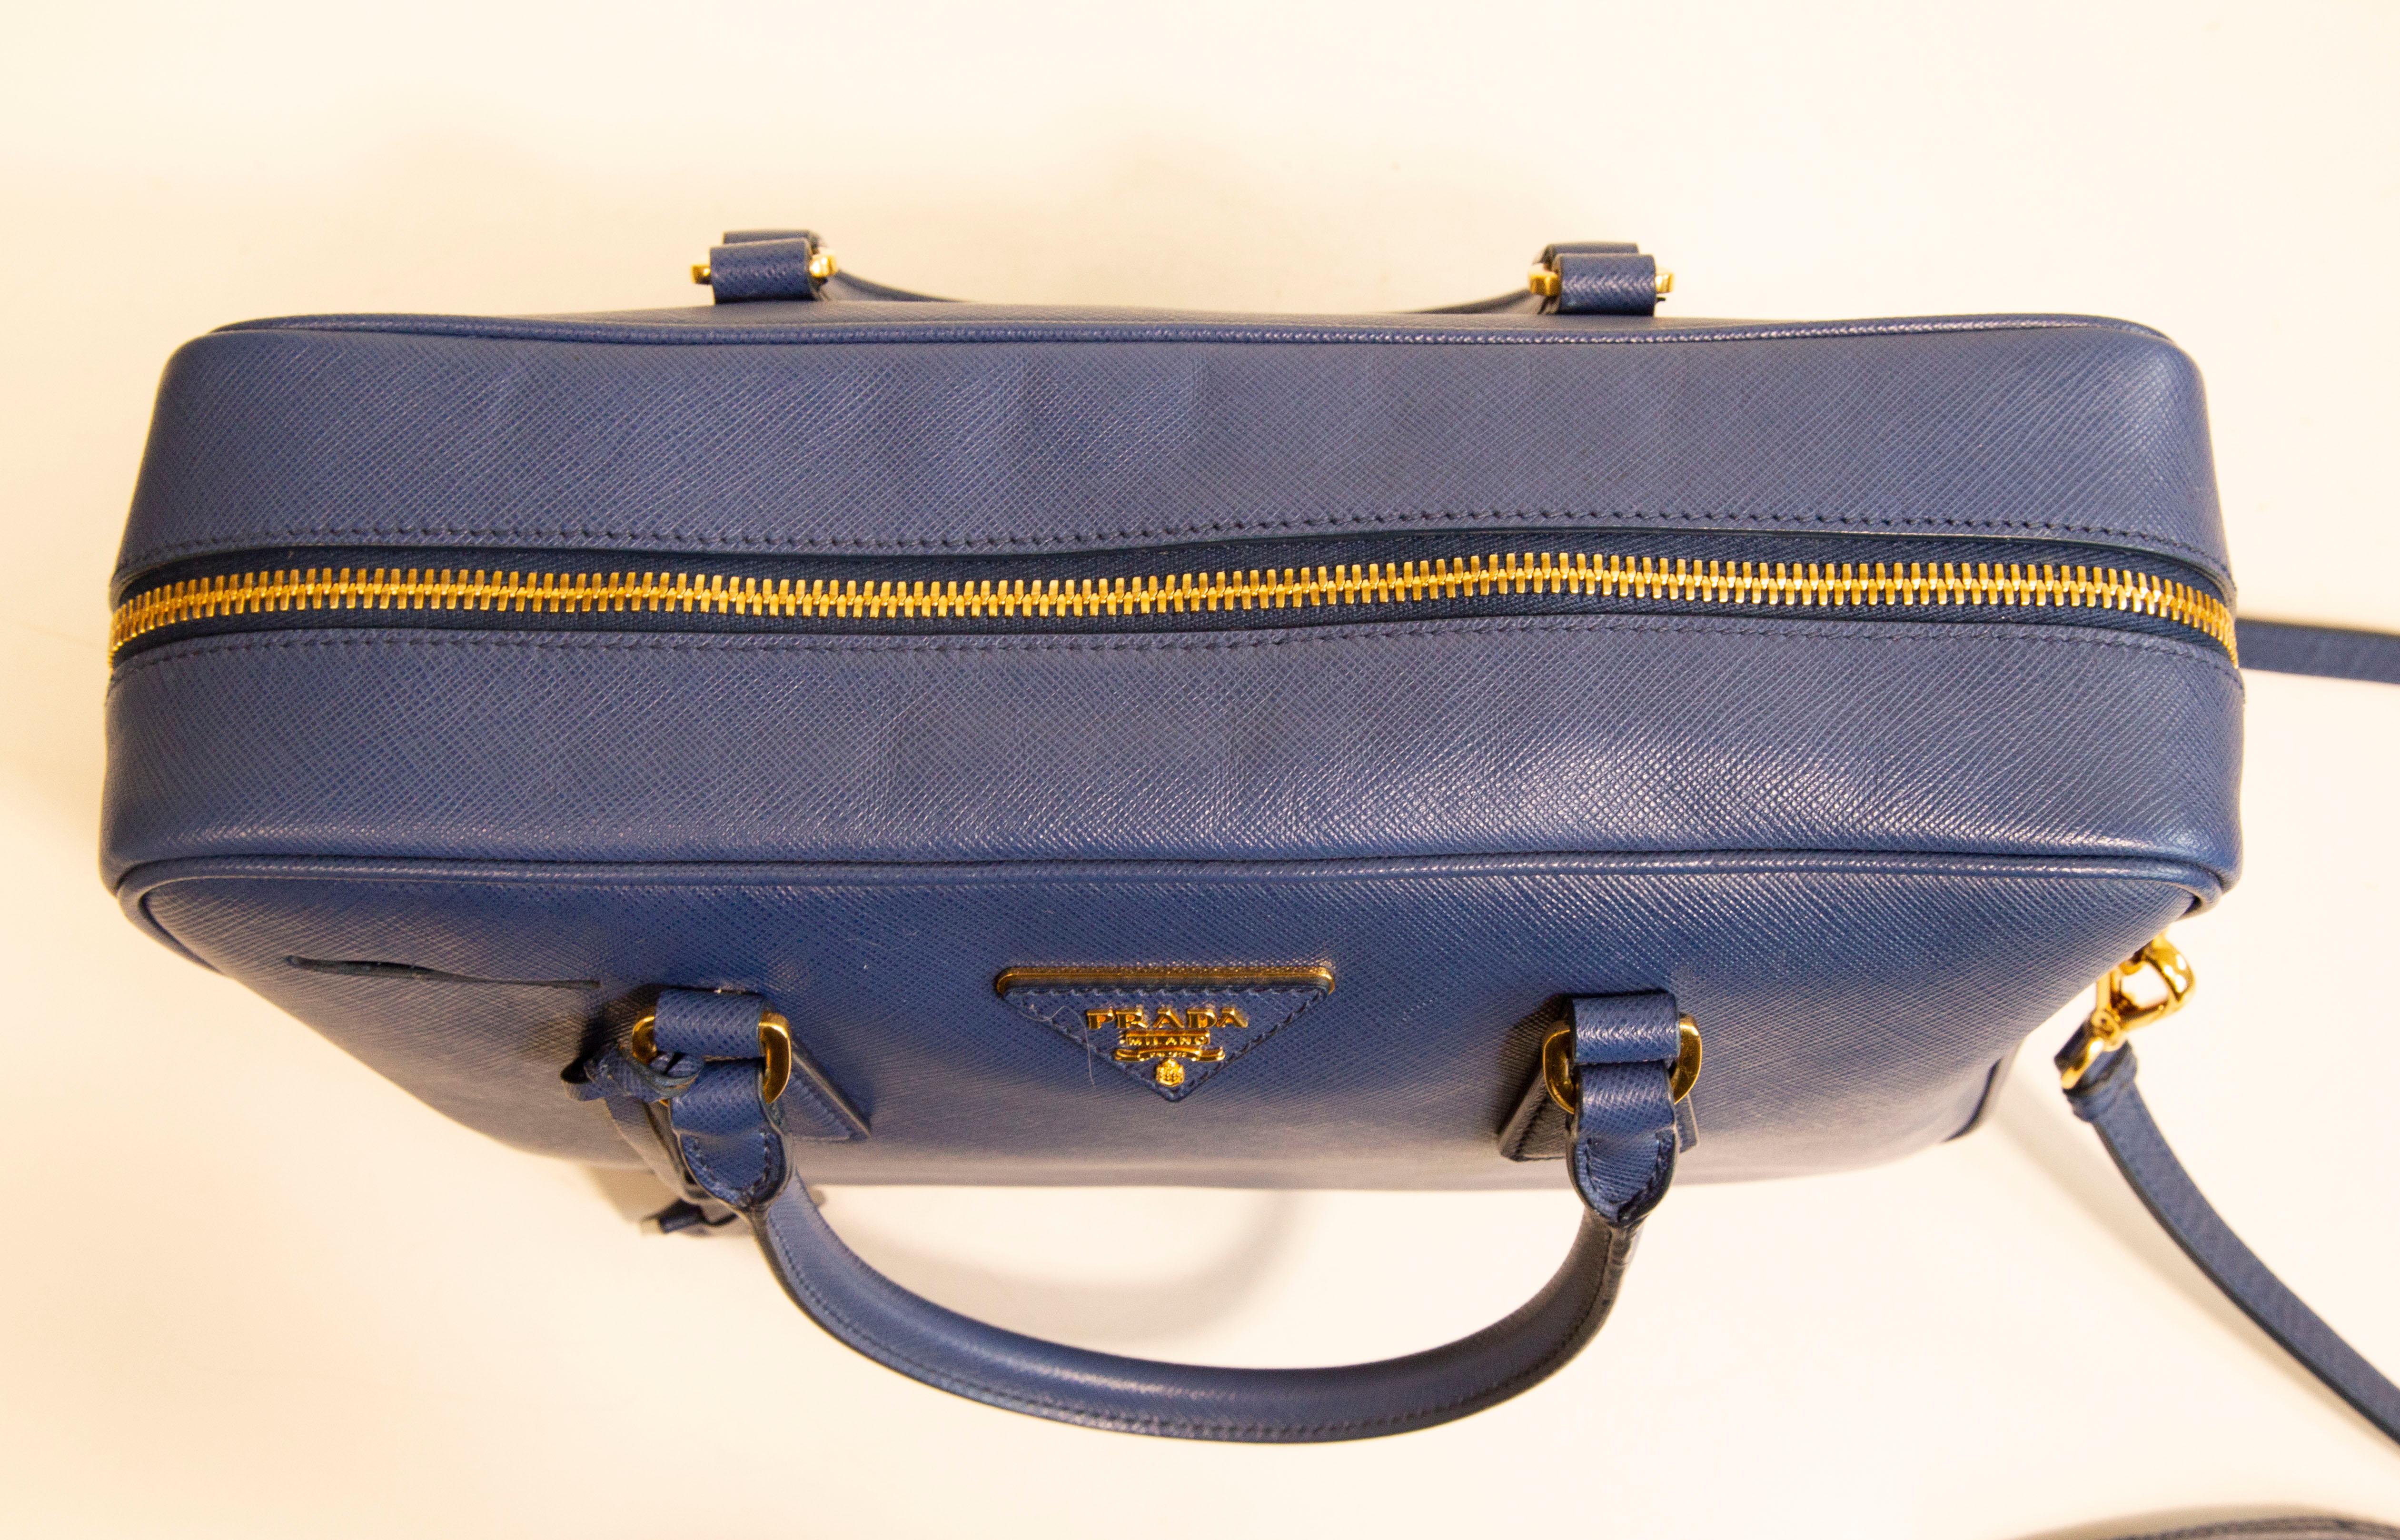  Prada Galleria Two Way Bag in Blue Saffiano Leather 11